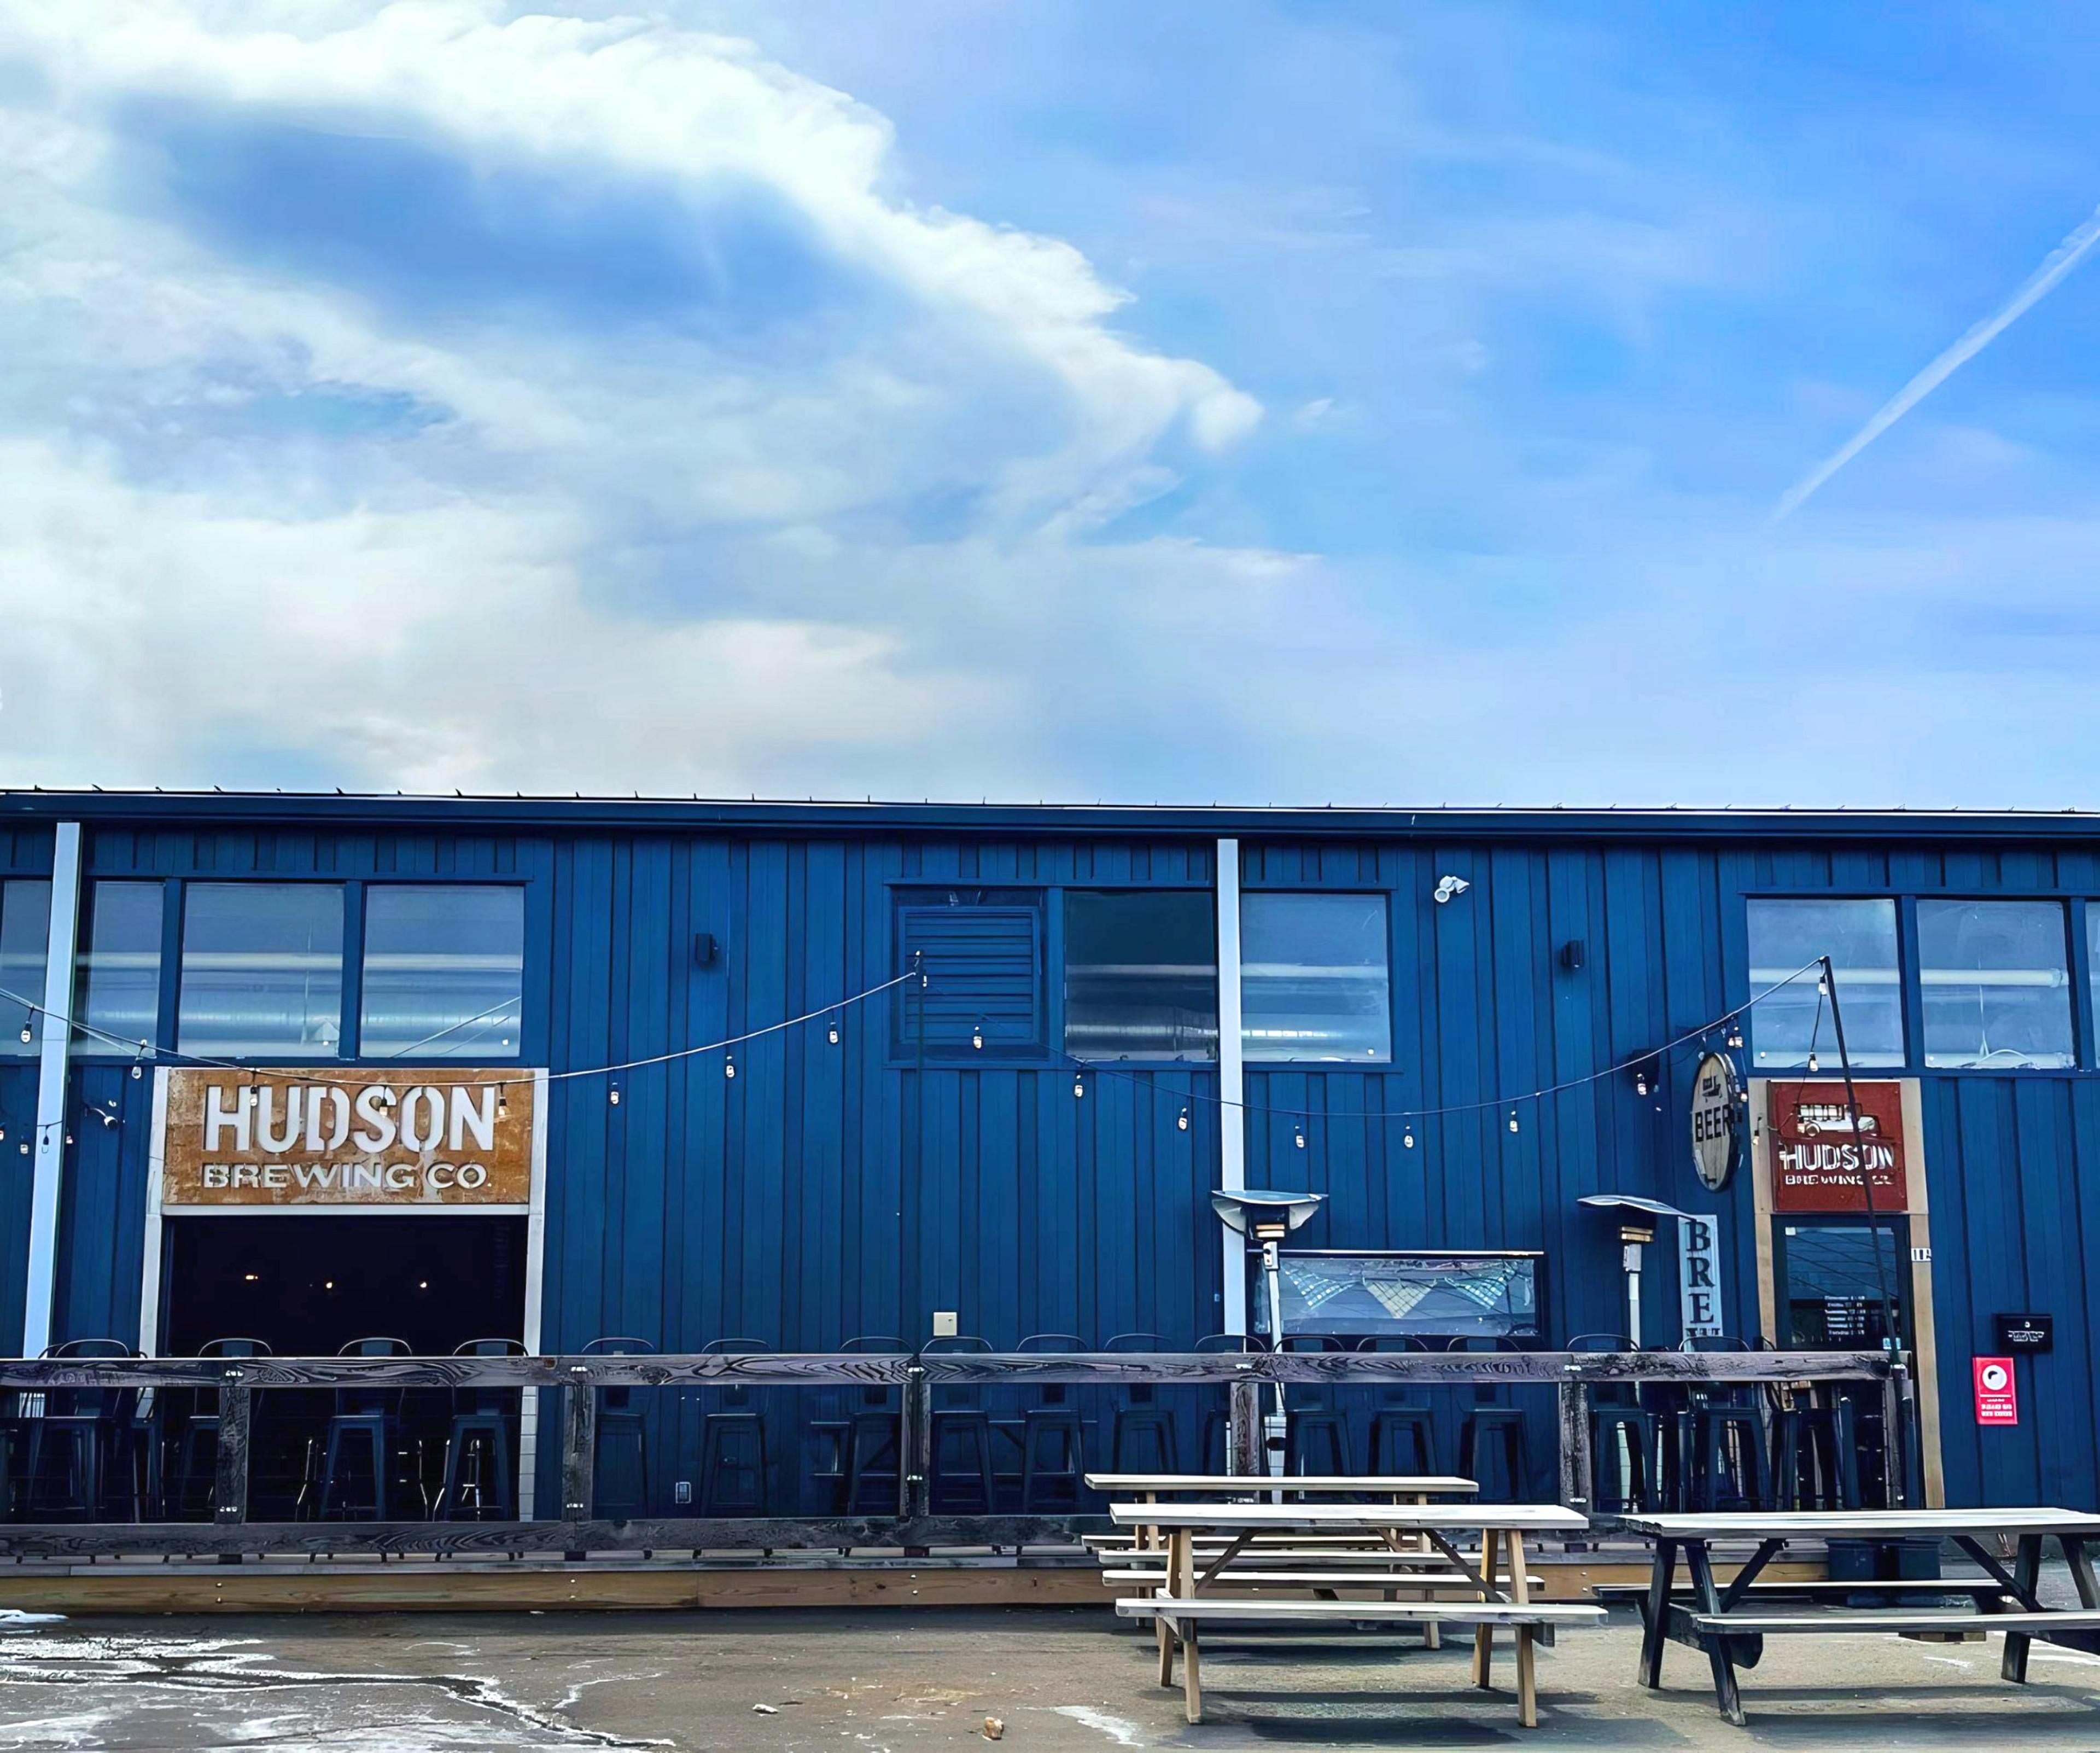 Hudson Brewing Company